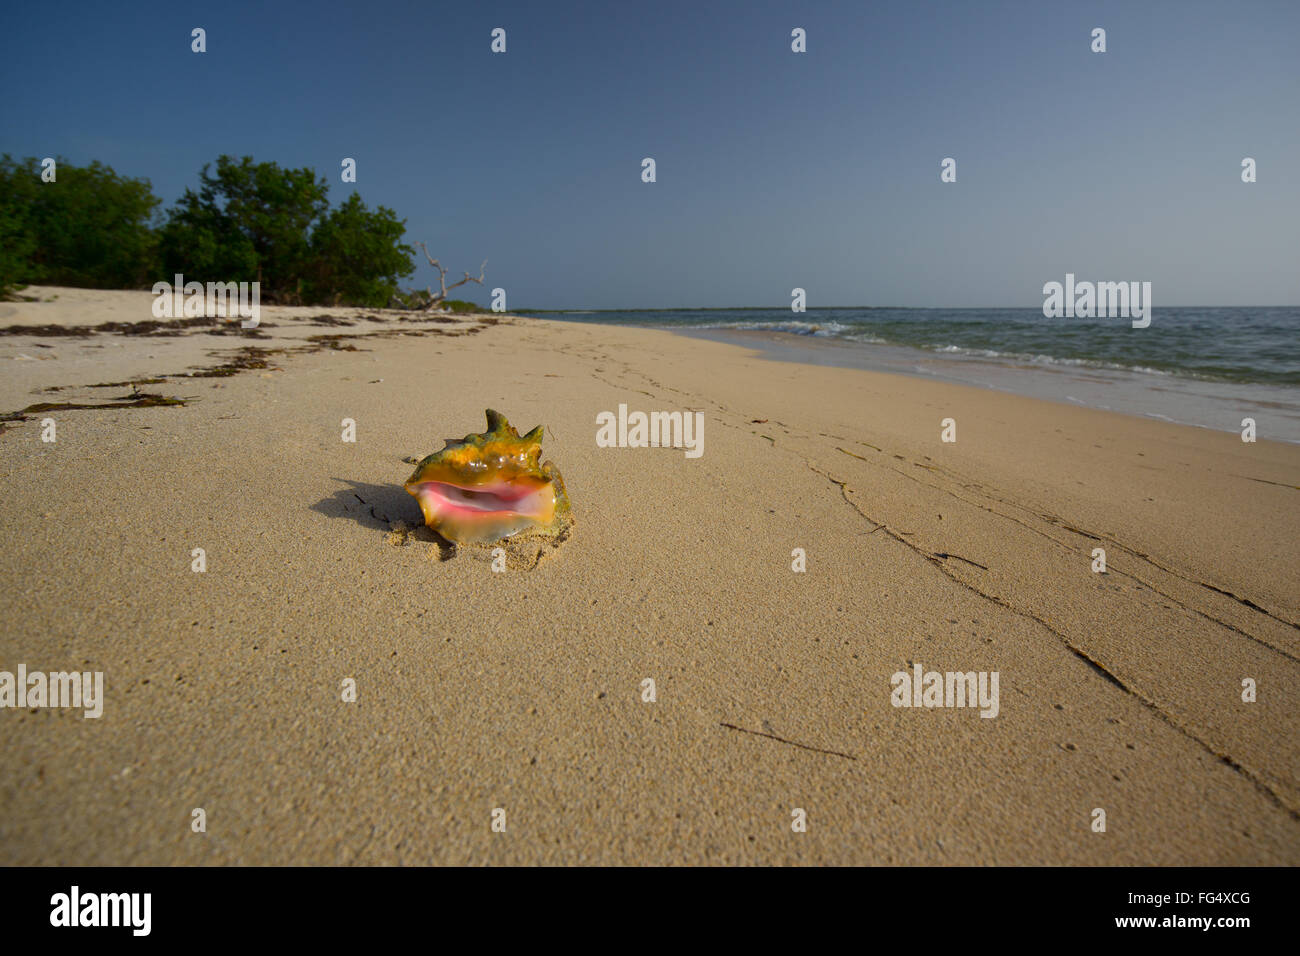 Caribbean Queen Conch on the beach at Anclitas Island, Jardines de la Reina marine reserve, Cuba Stock Photo